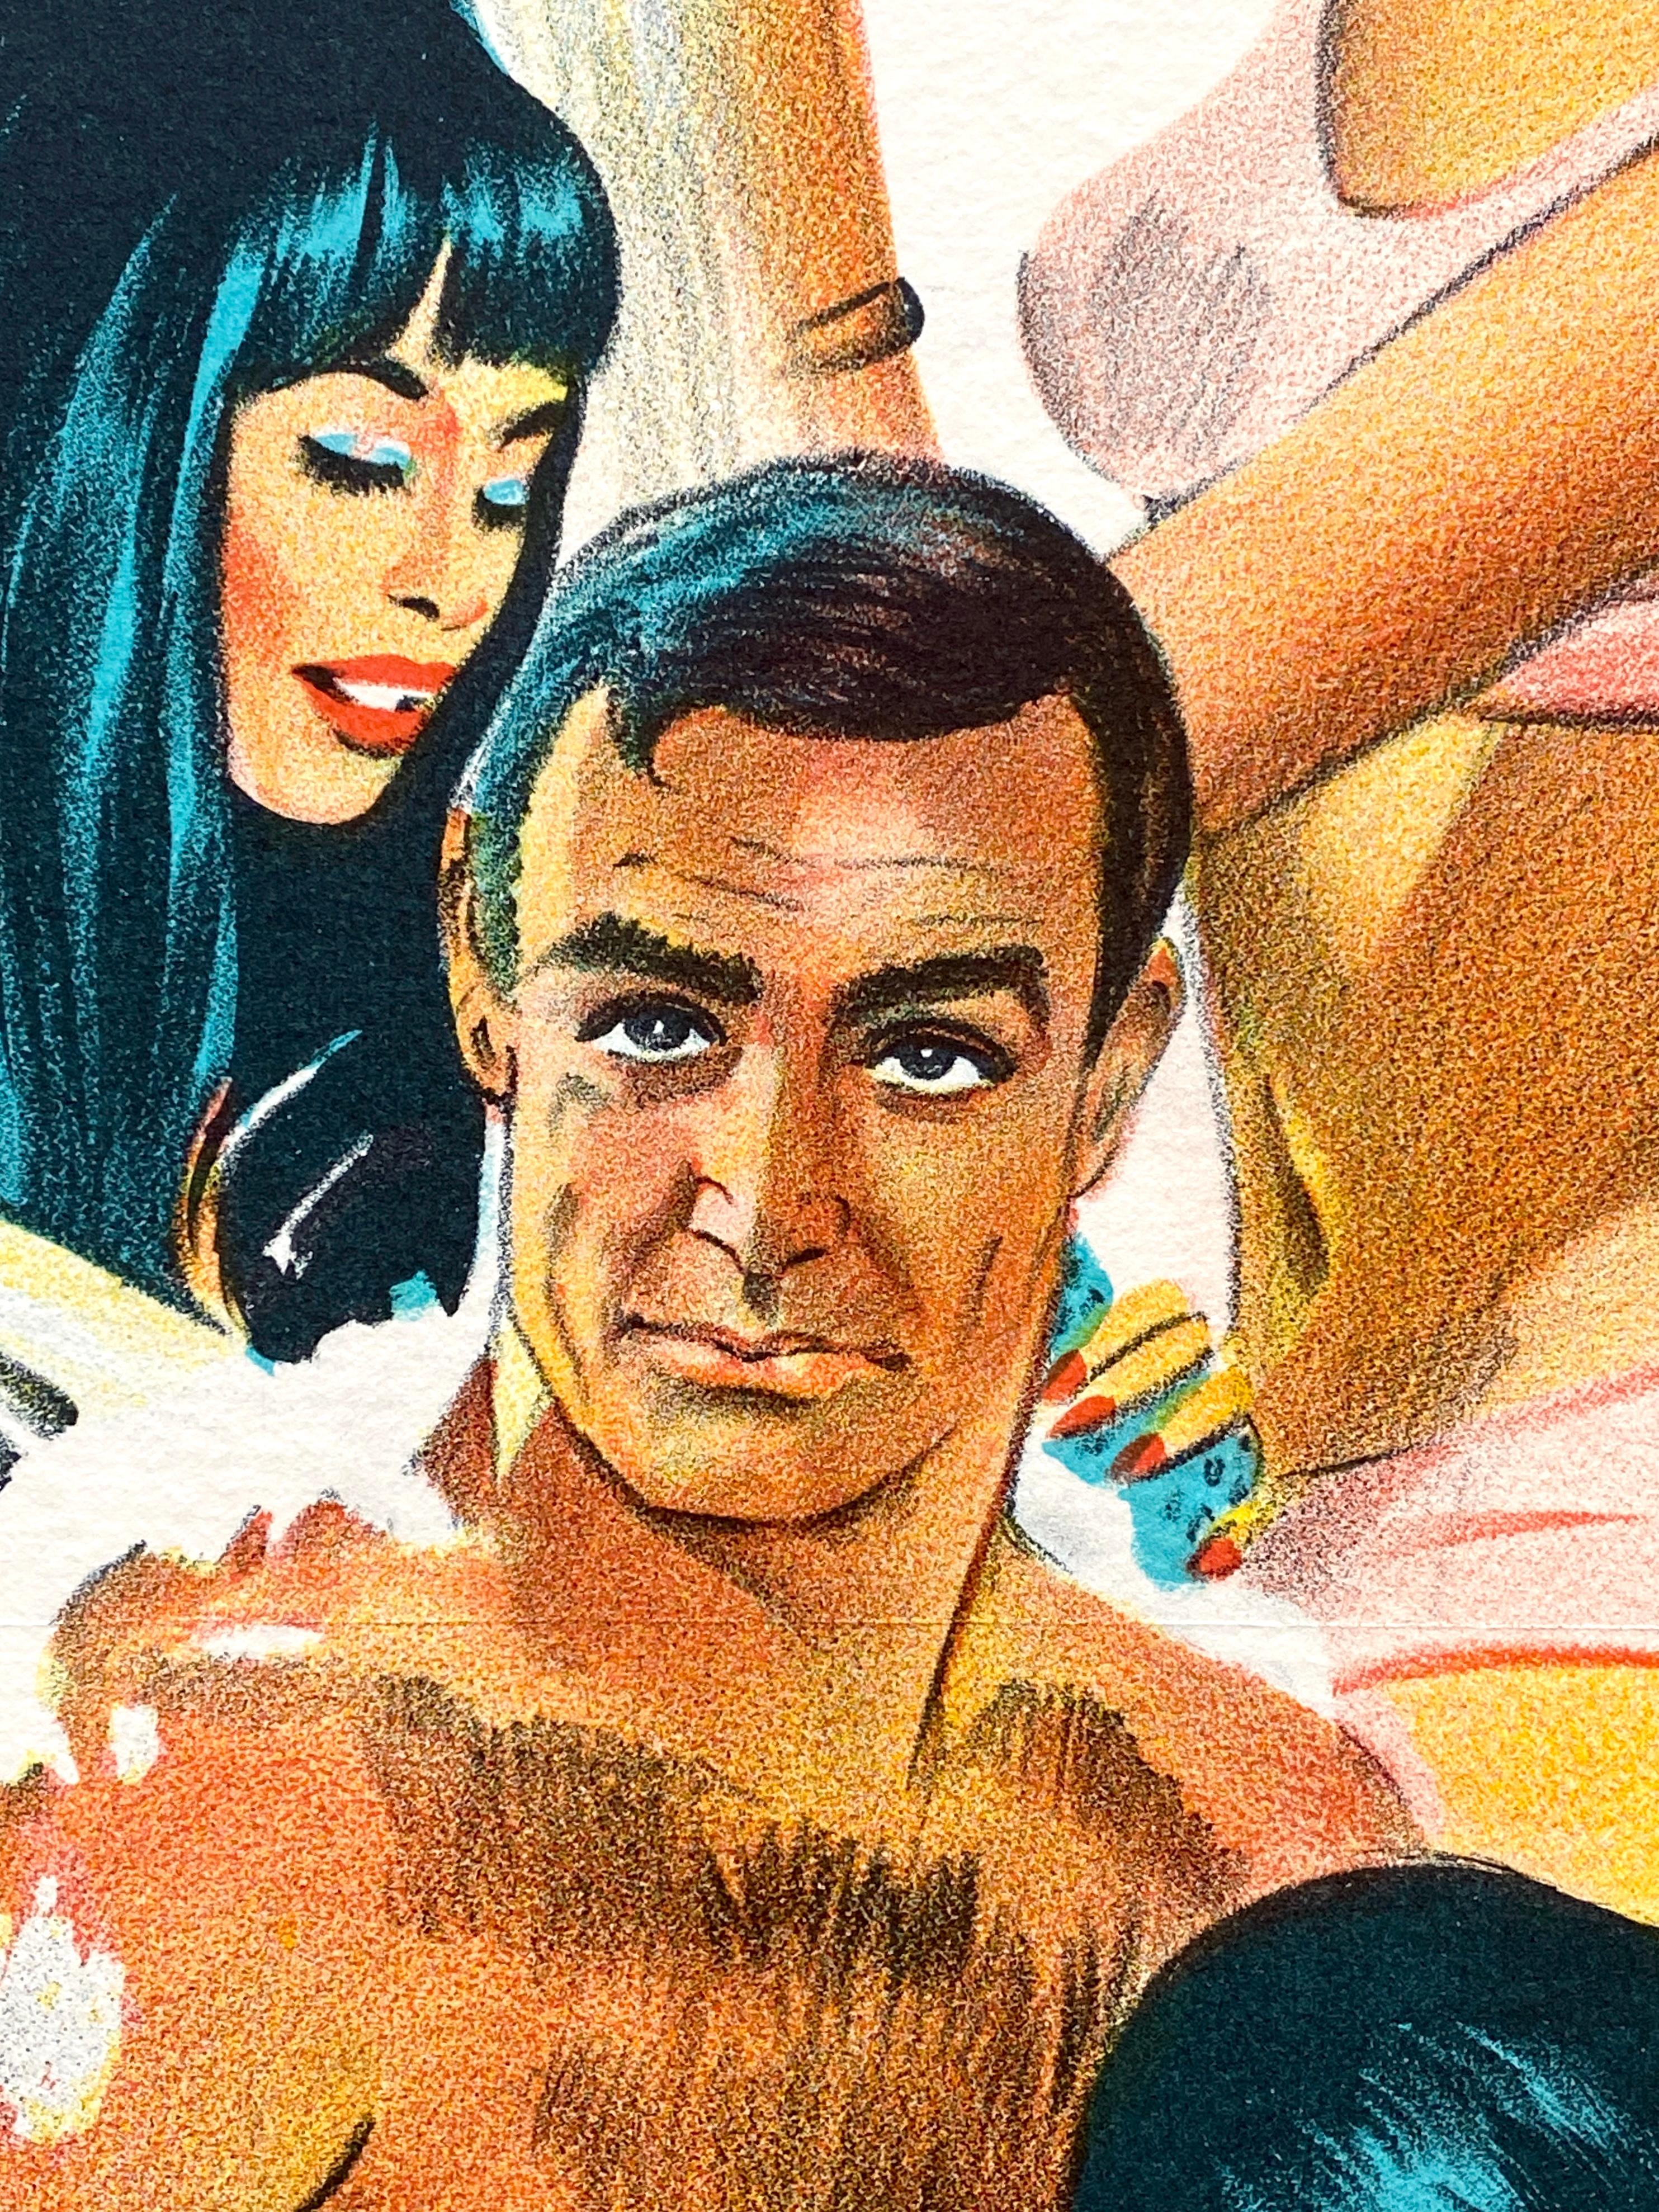 James Bond 'You Only Live Twice' Original Vintage Movie Poster, Australian, 1967 For Sale 1